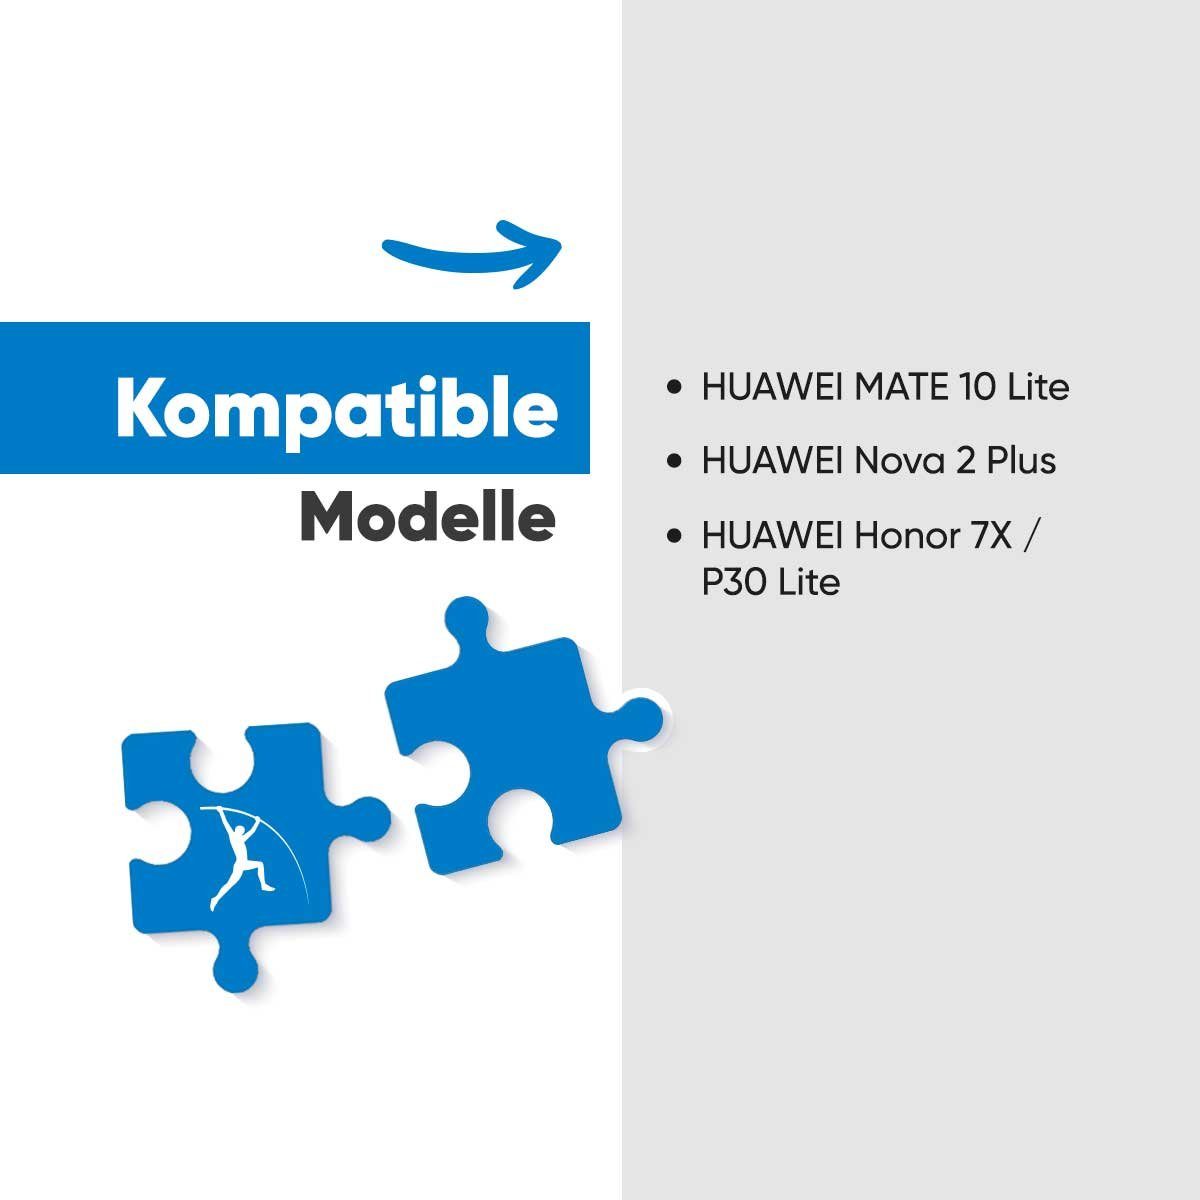 Woyax Wunderbatterie Akku für Mate Handy-Akku 3340 HB356687ECW / mAh 10 Lite Huawei V) (3.82